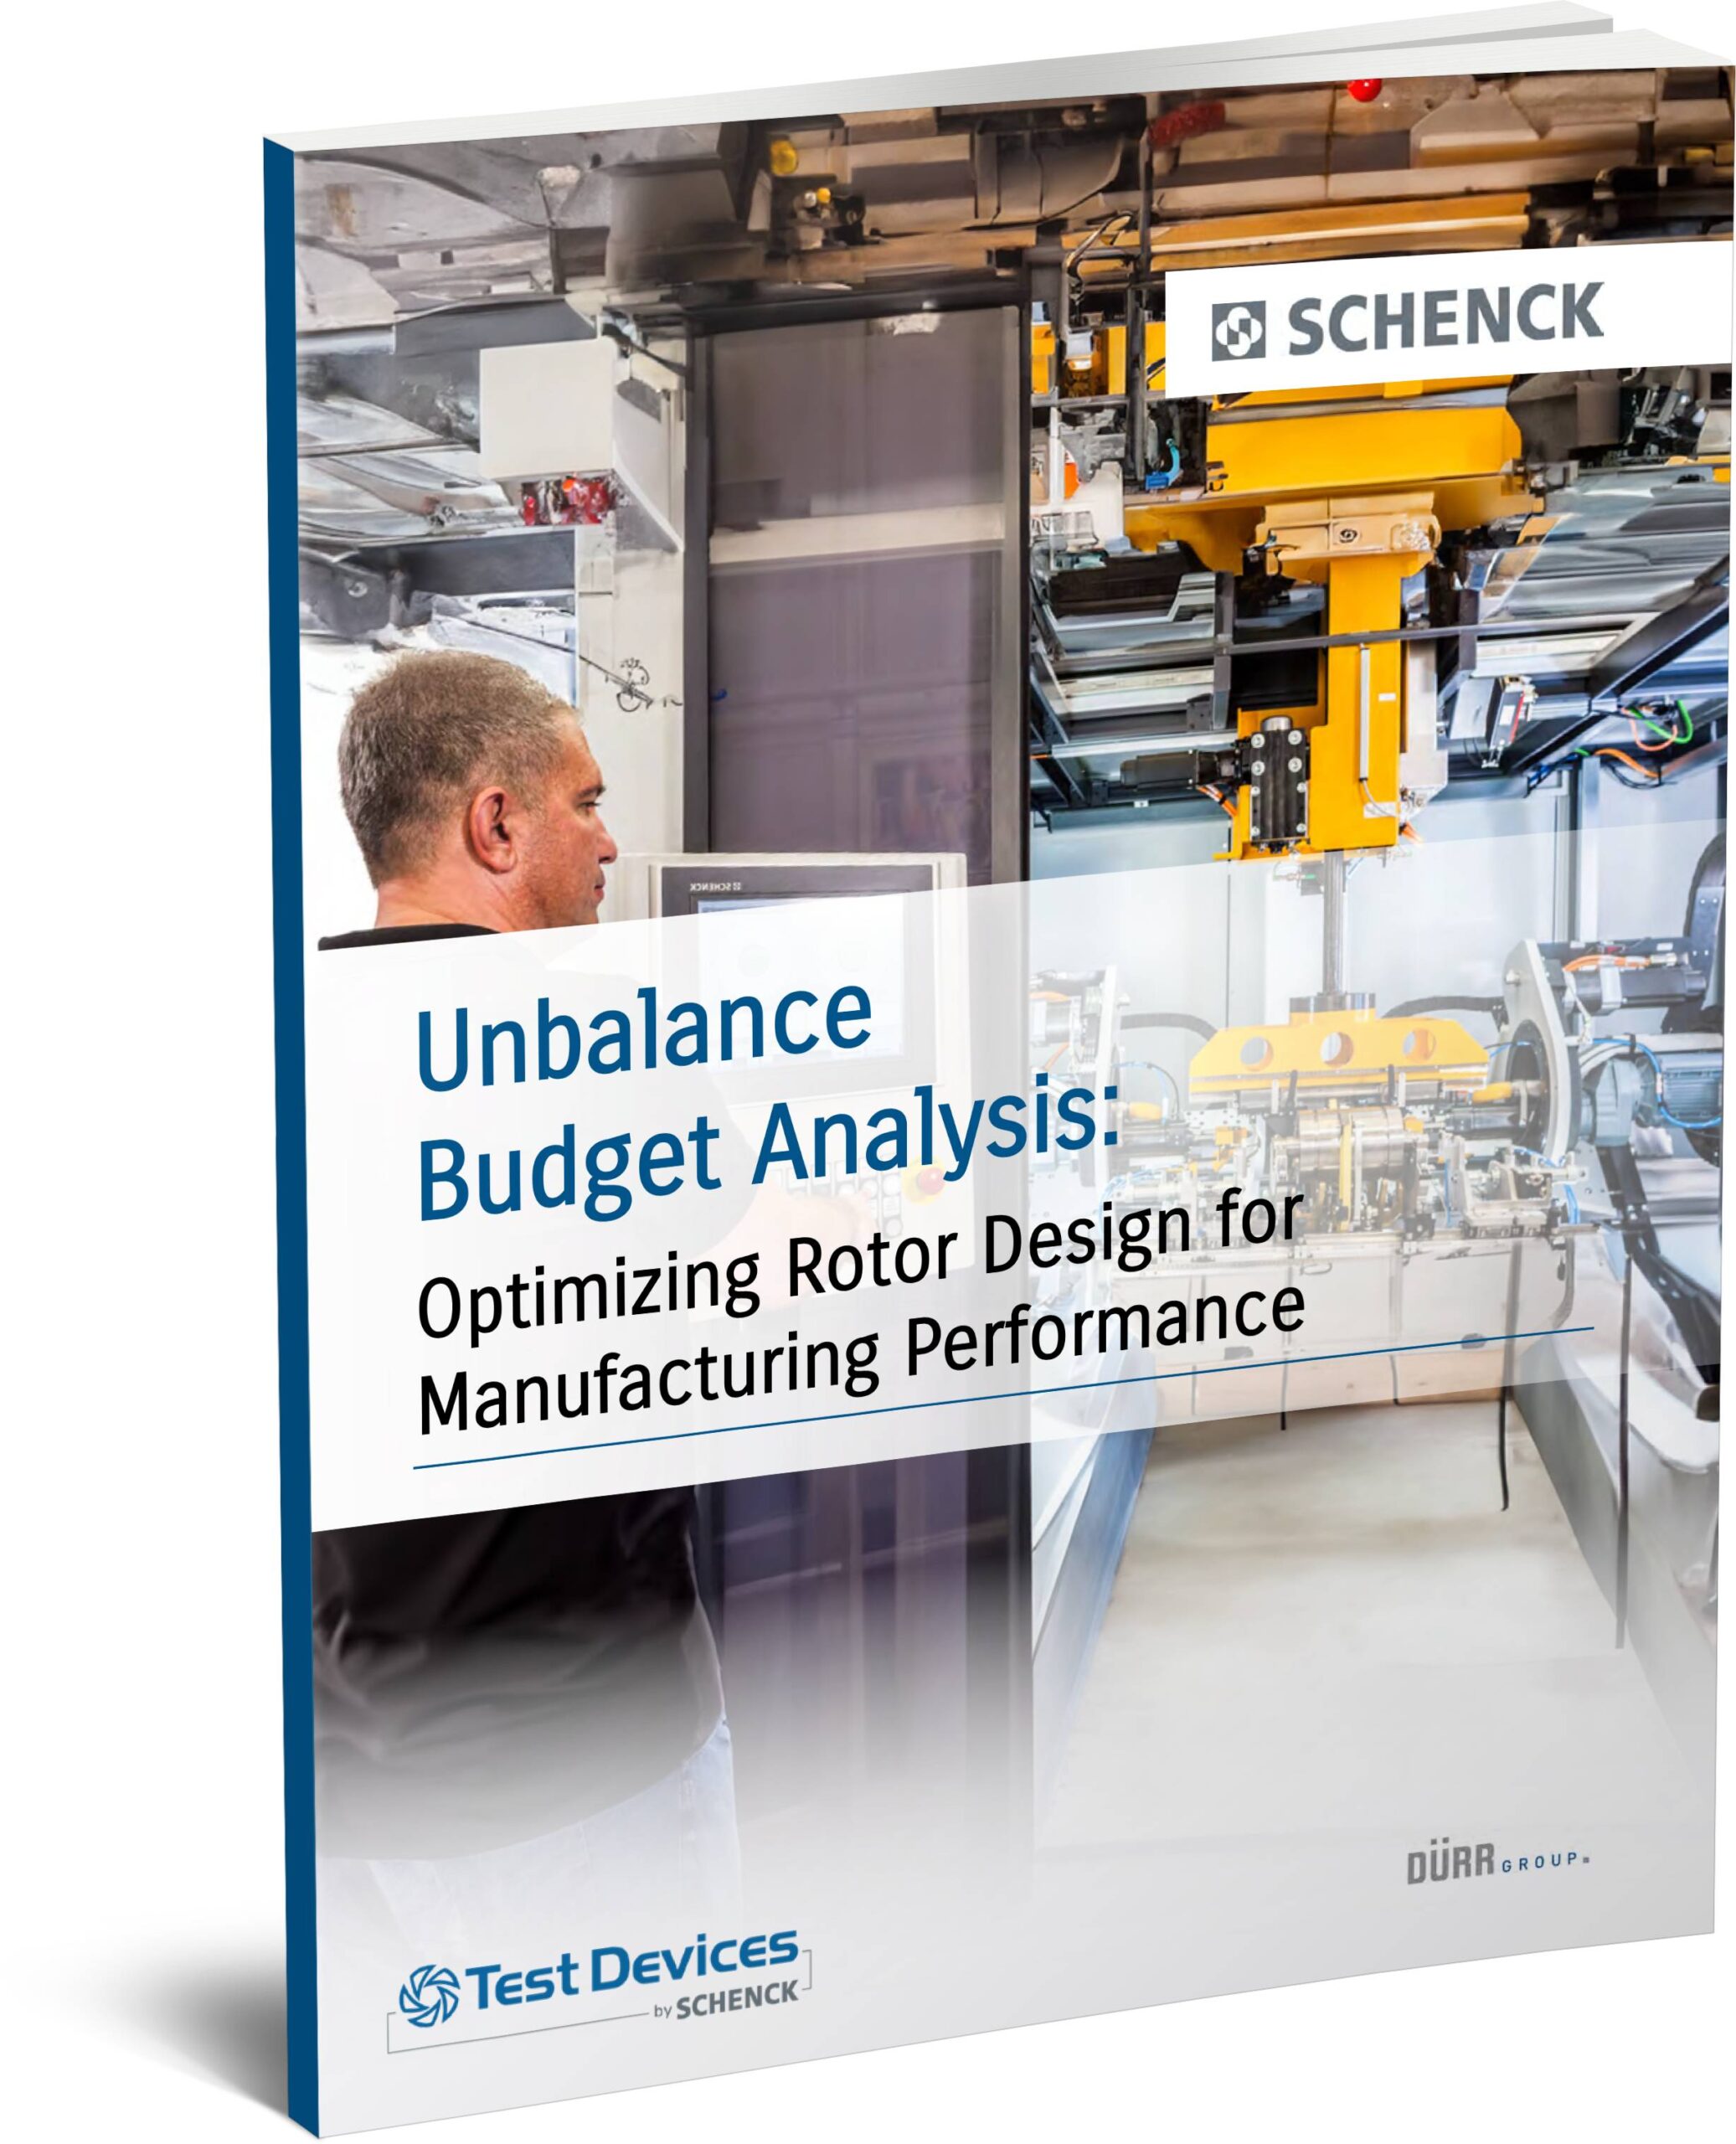 Unbalance Budget Analysis: Optimizing Rotor Design for Manufacturing Performance